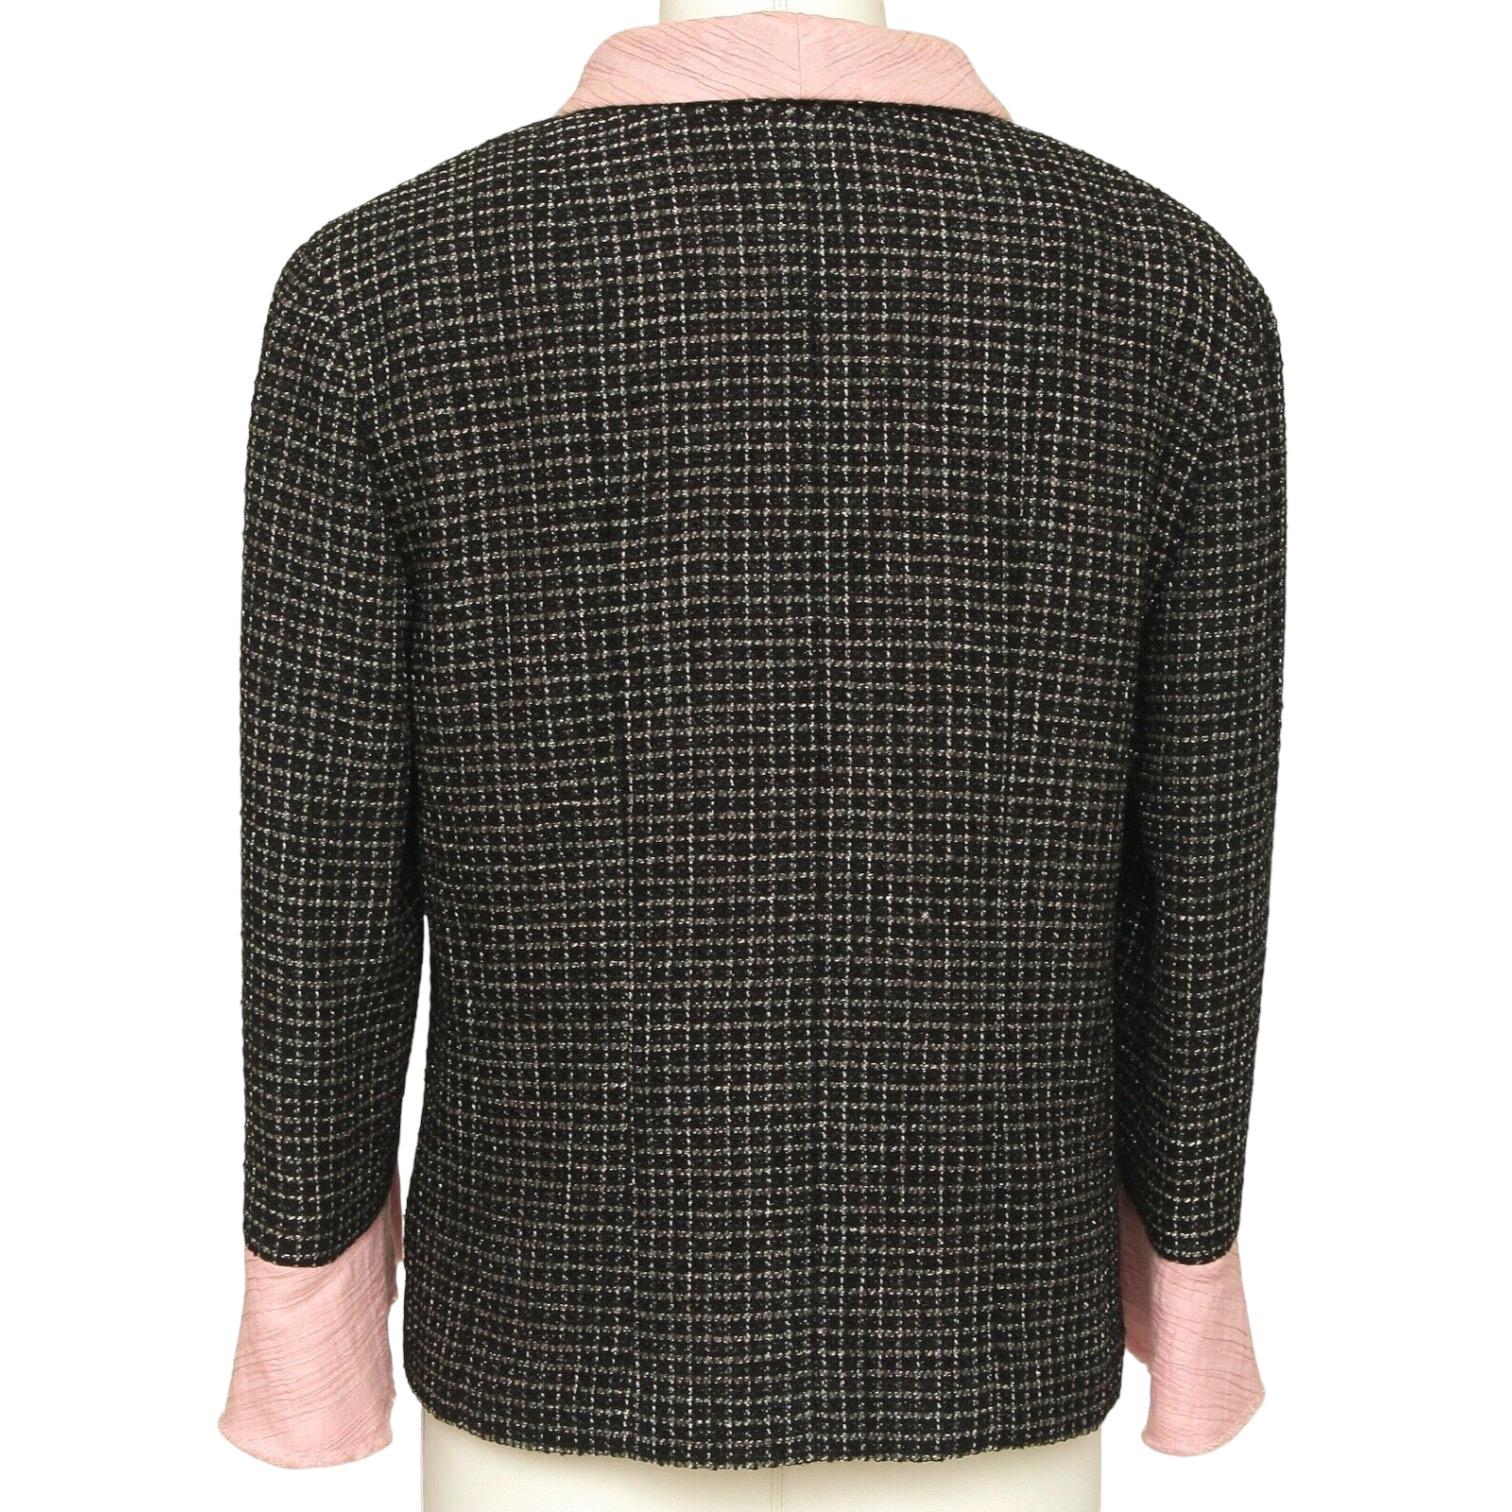 Women's CHANEL Jacket Blazer Coat Tweed Black Iridescent Pink Gripoix Button Sz 40 2012 For Sale